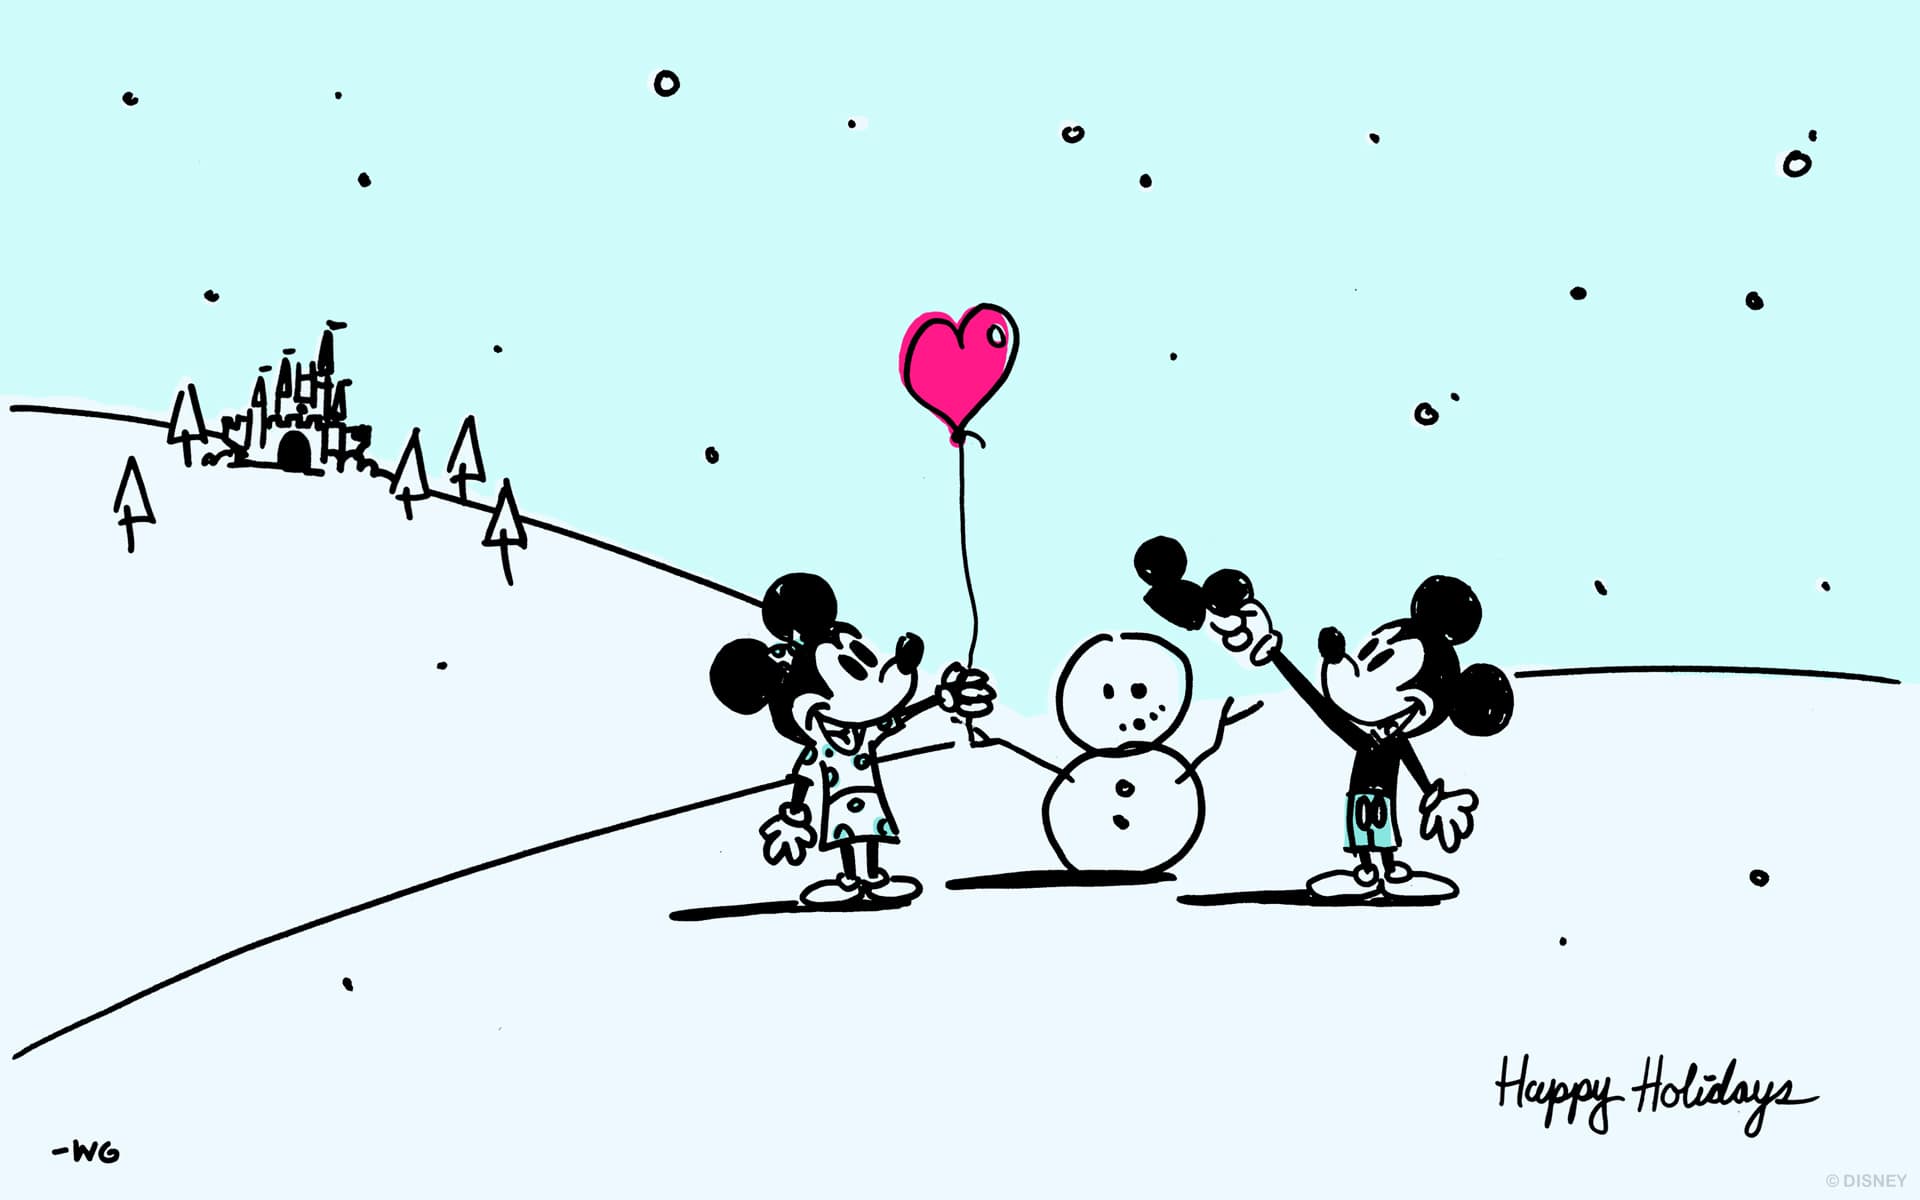 Disney Artist Will Gay Shares Childhood Inspired Holiday Wallpaper. Disney Parks Blog